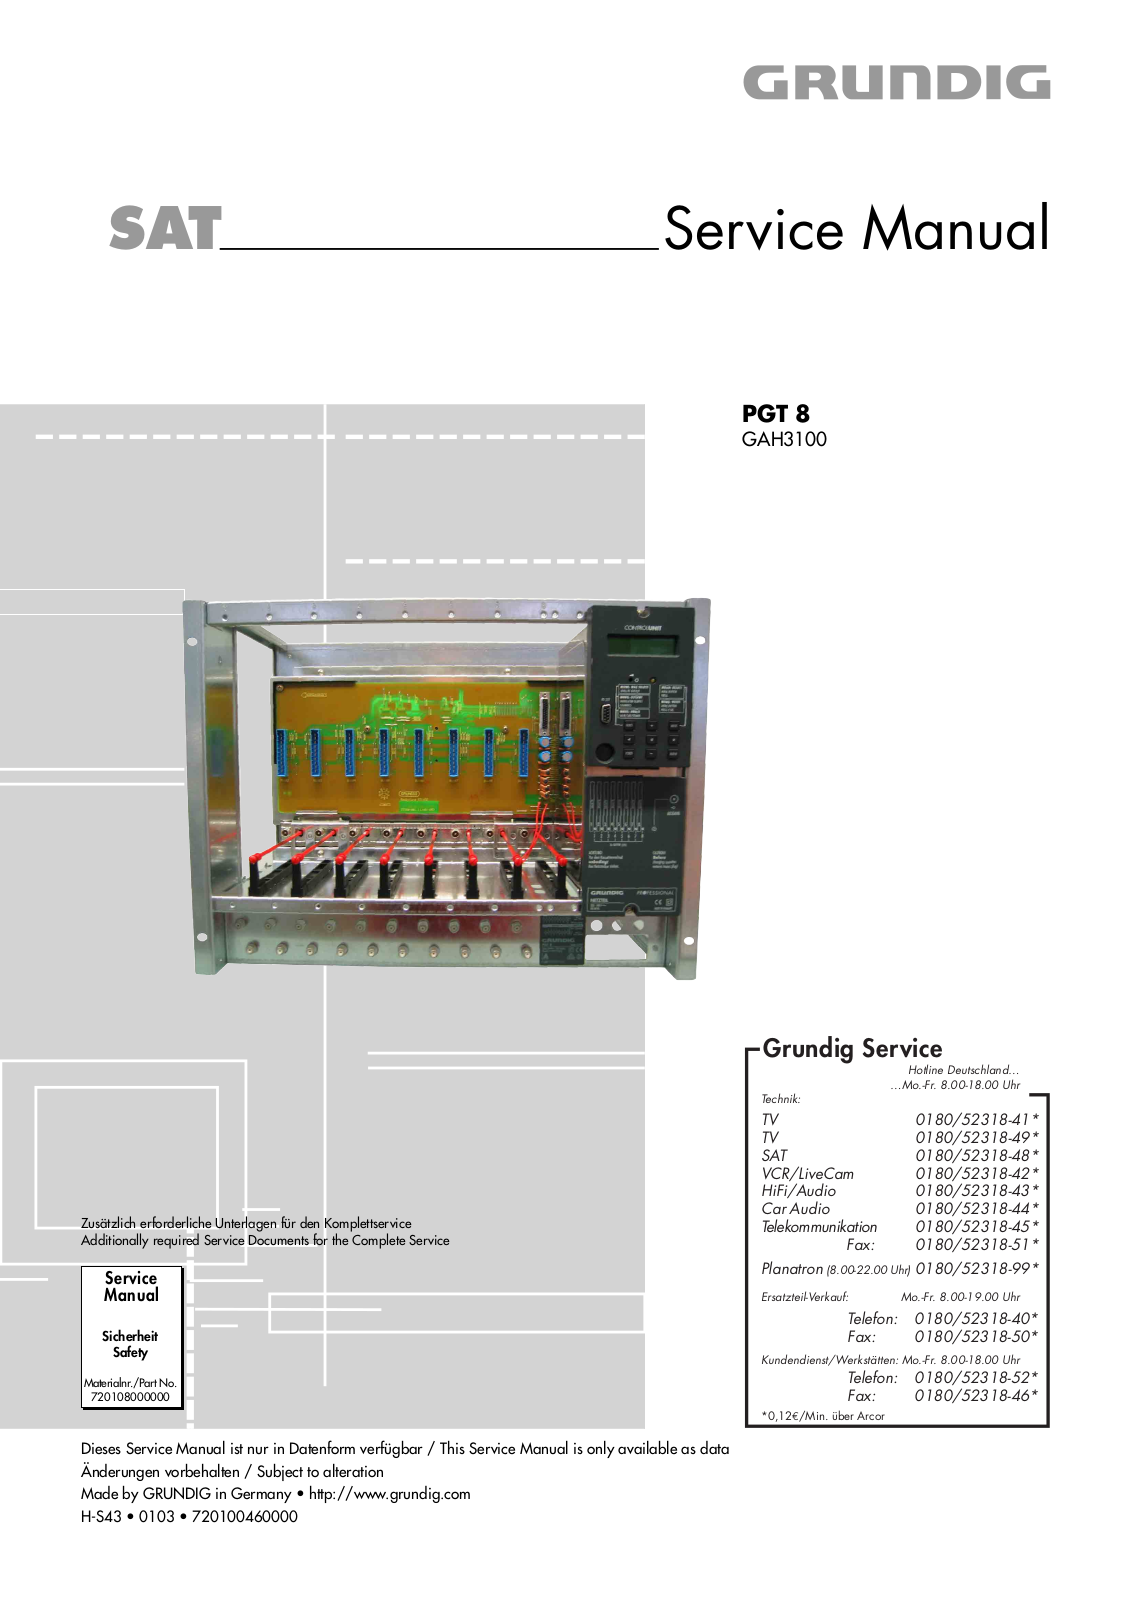 GRUNDIG STC332 SAT Service Manual